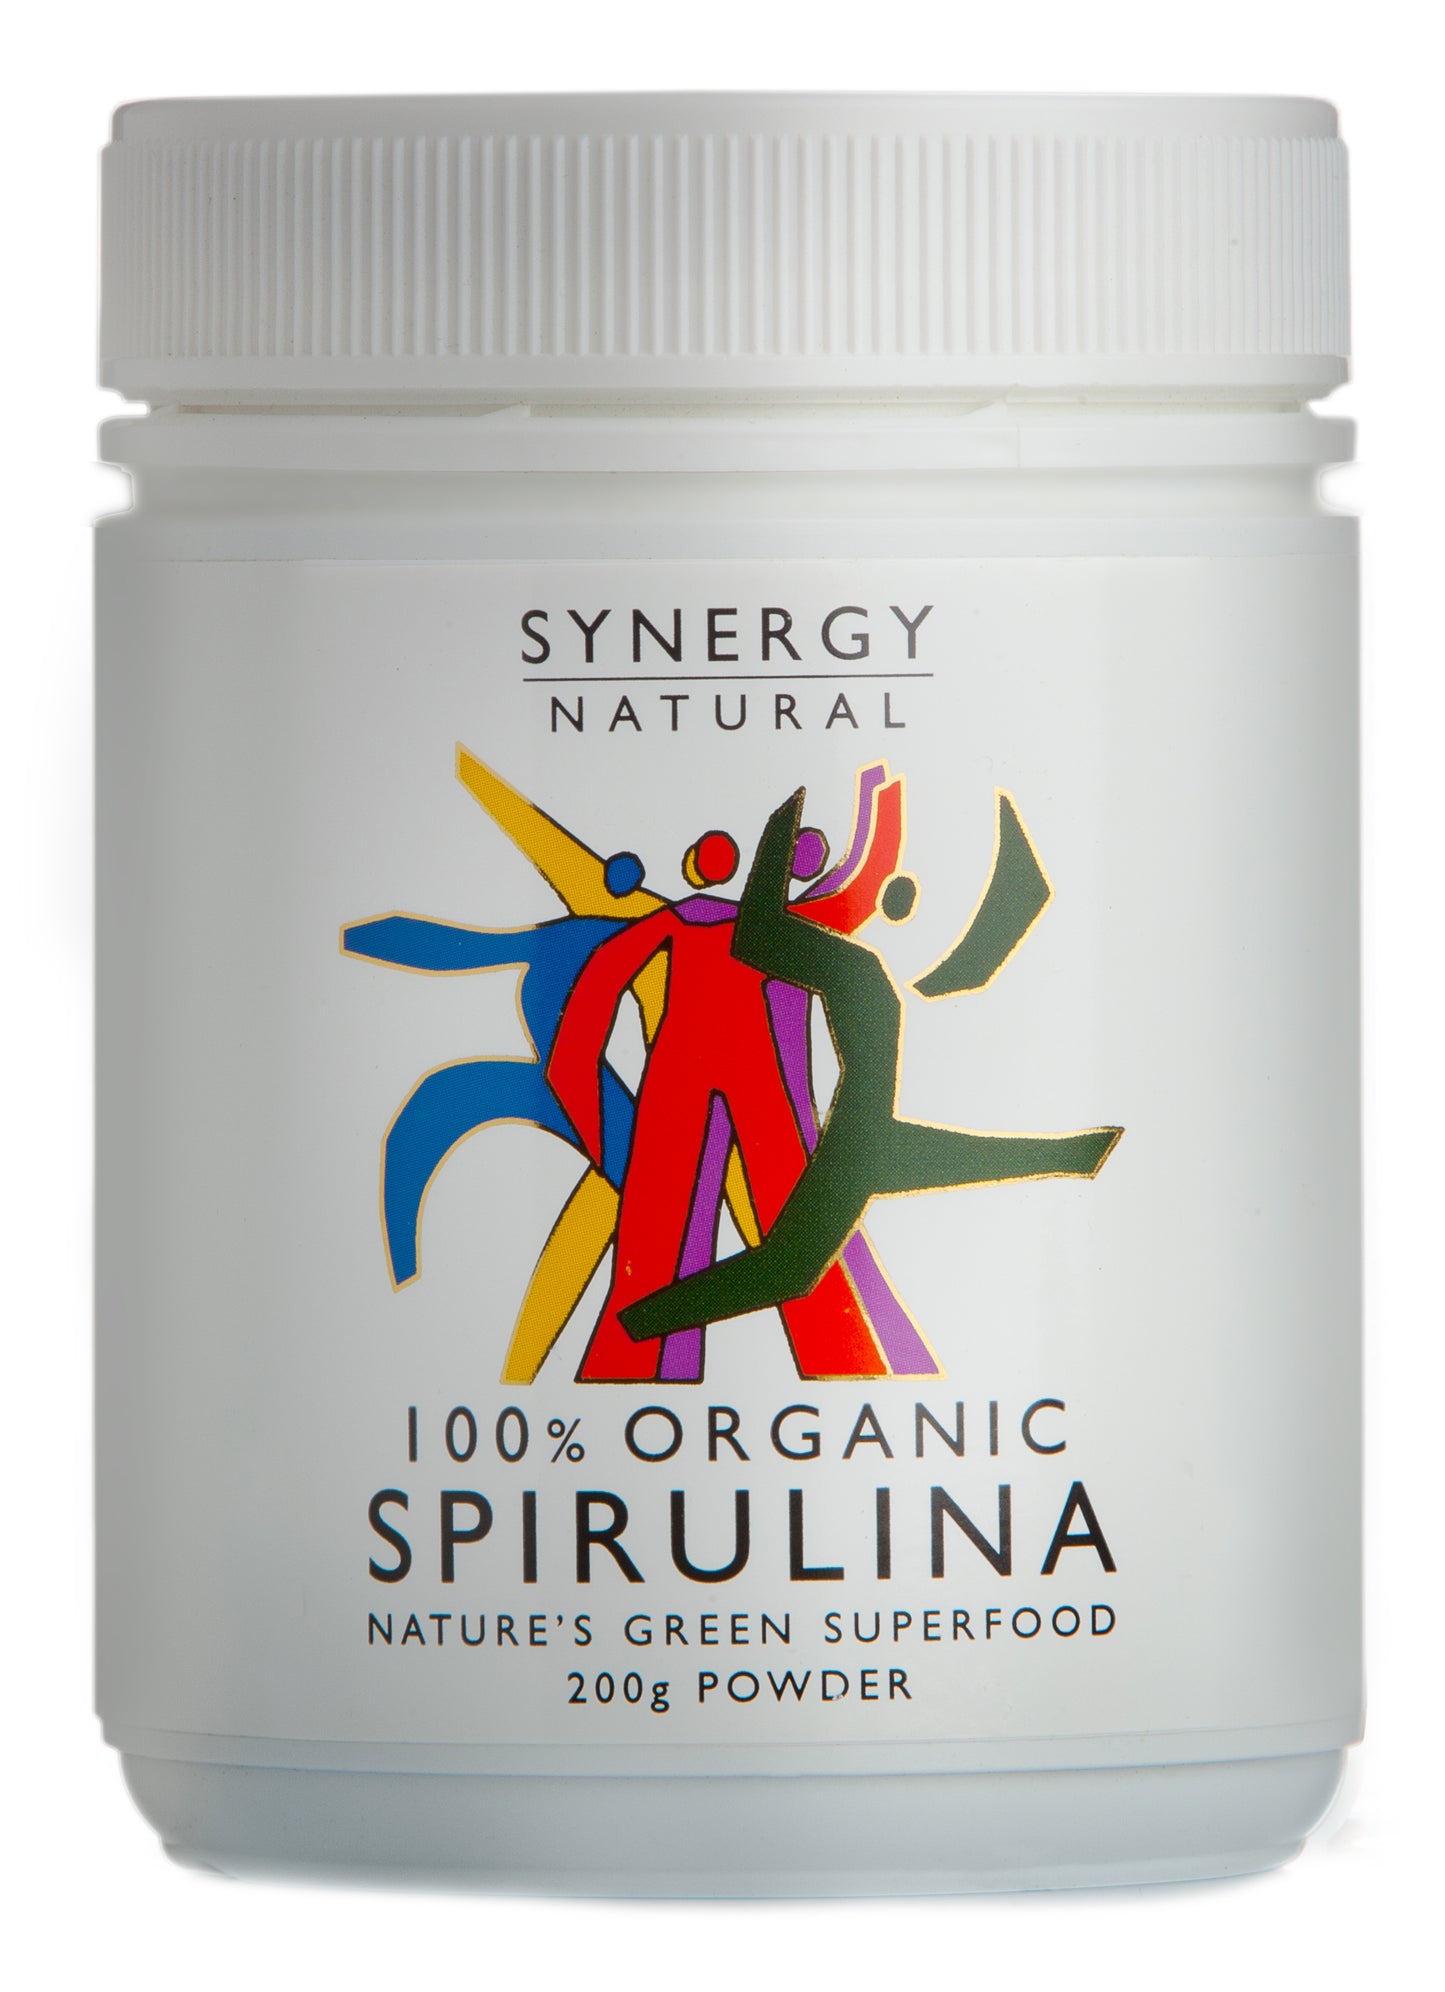 Synergy Natural Spirulina Organic 200g powder